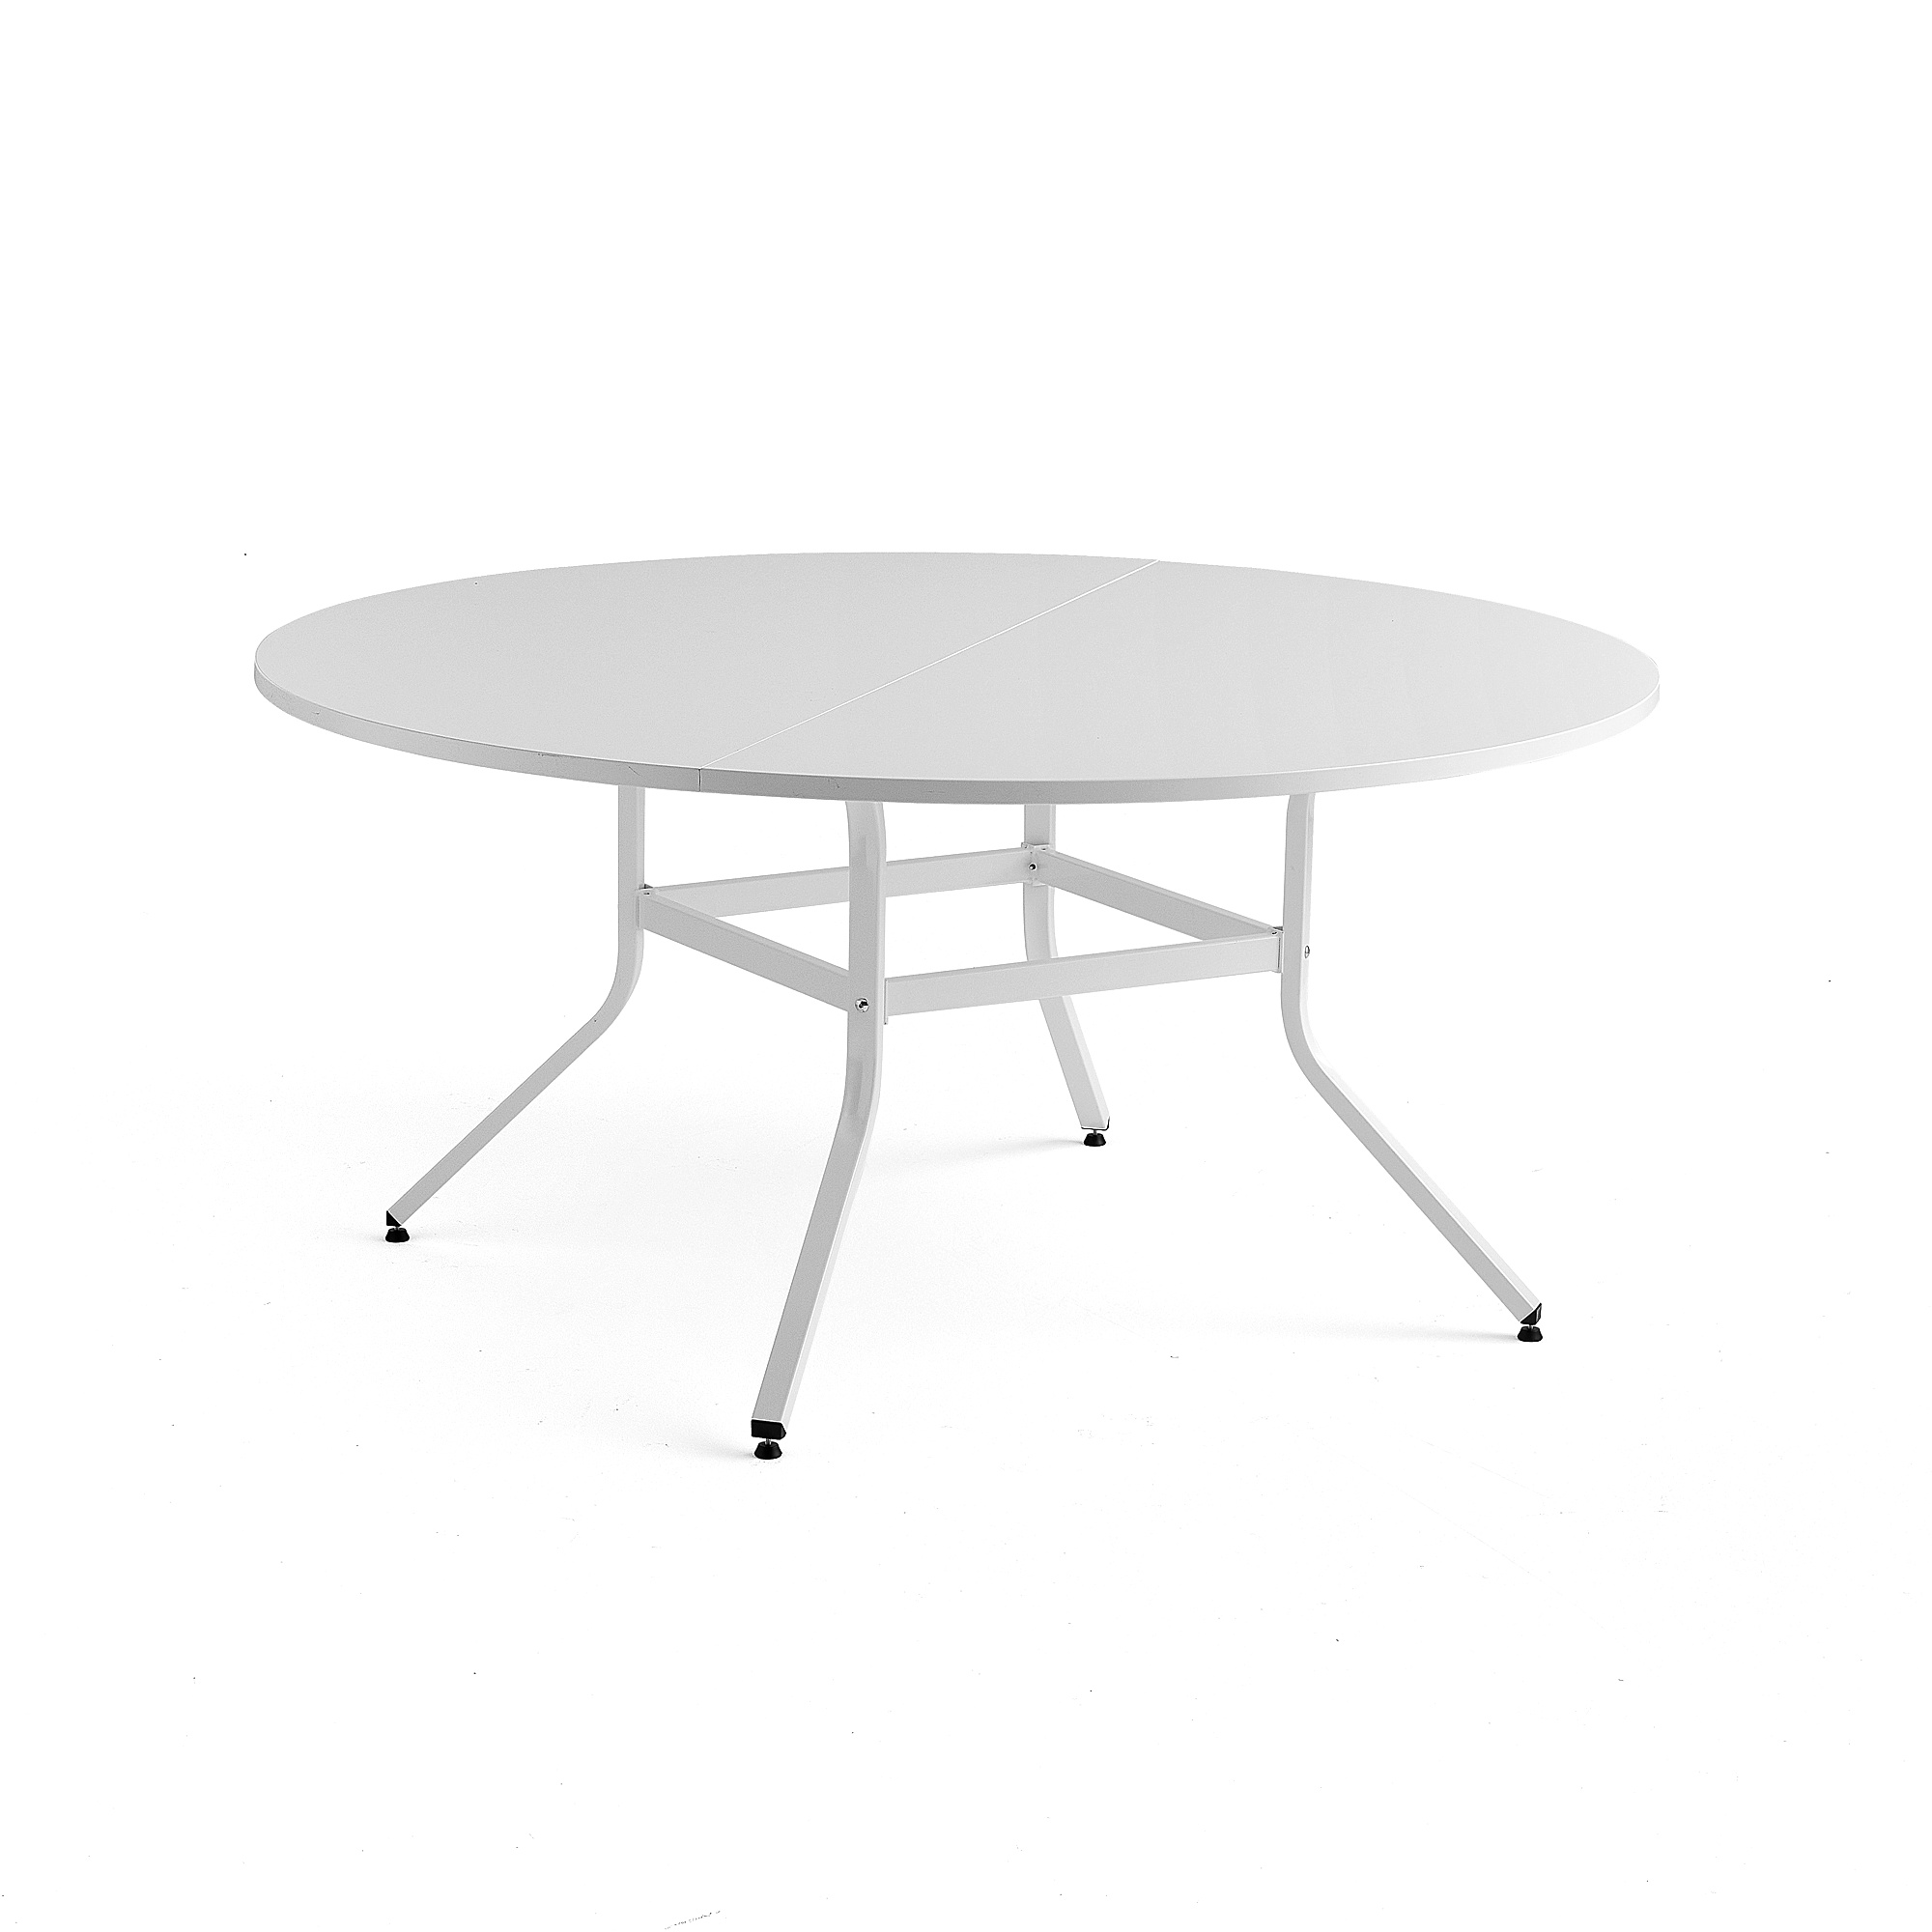 Stůl VARIOUS, Ø1600 mm, výška 740 mm, bílá, bílá